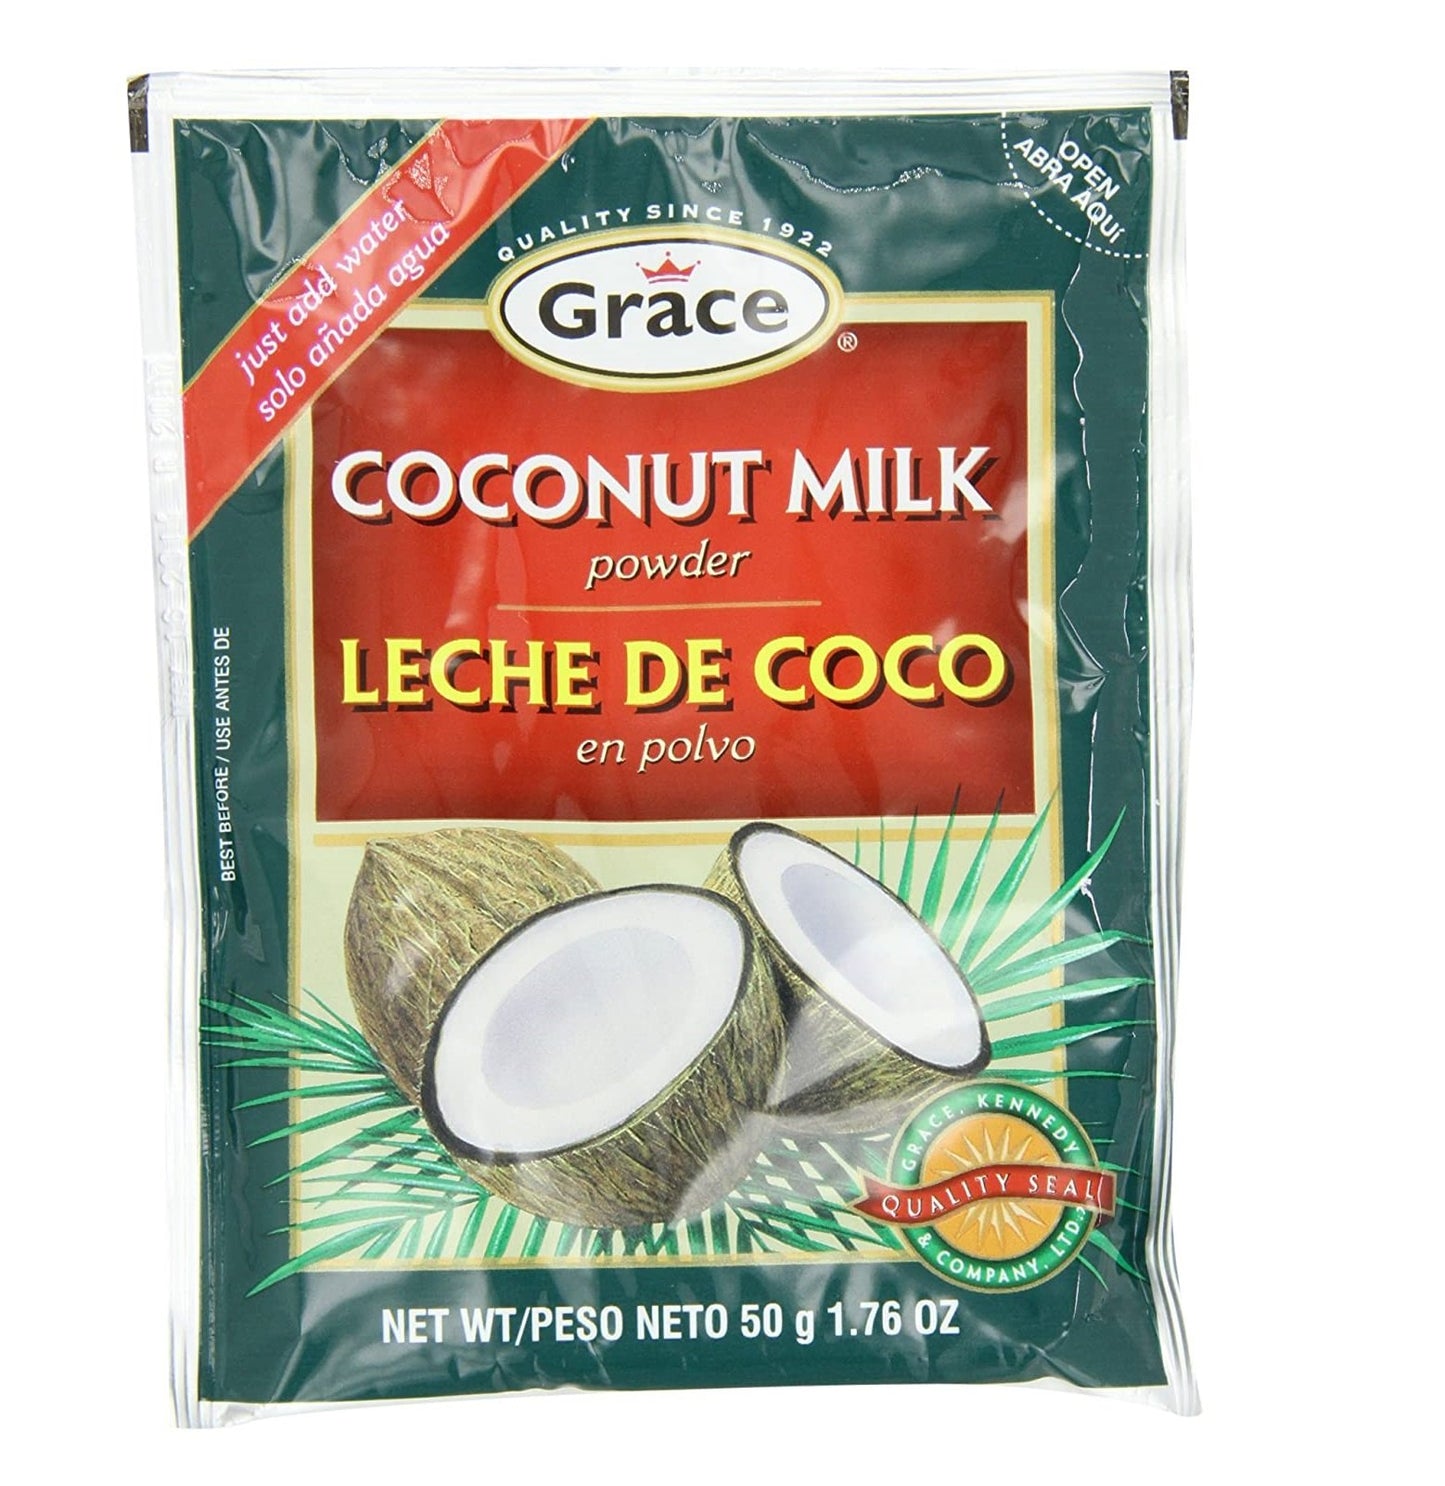 Grace Coconut Milk Powder 50g Box of 12